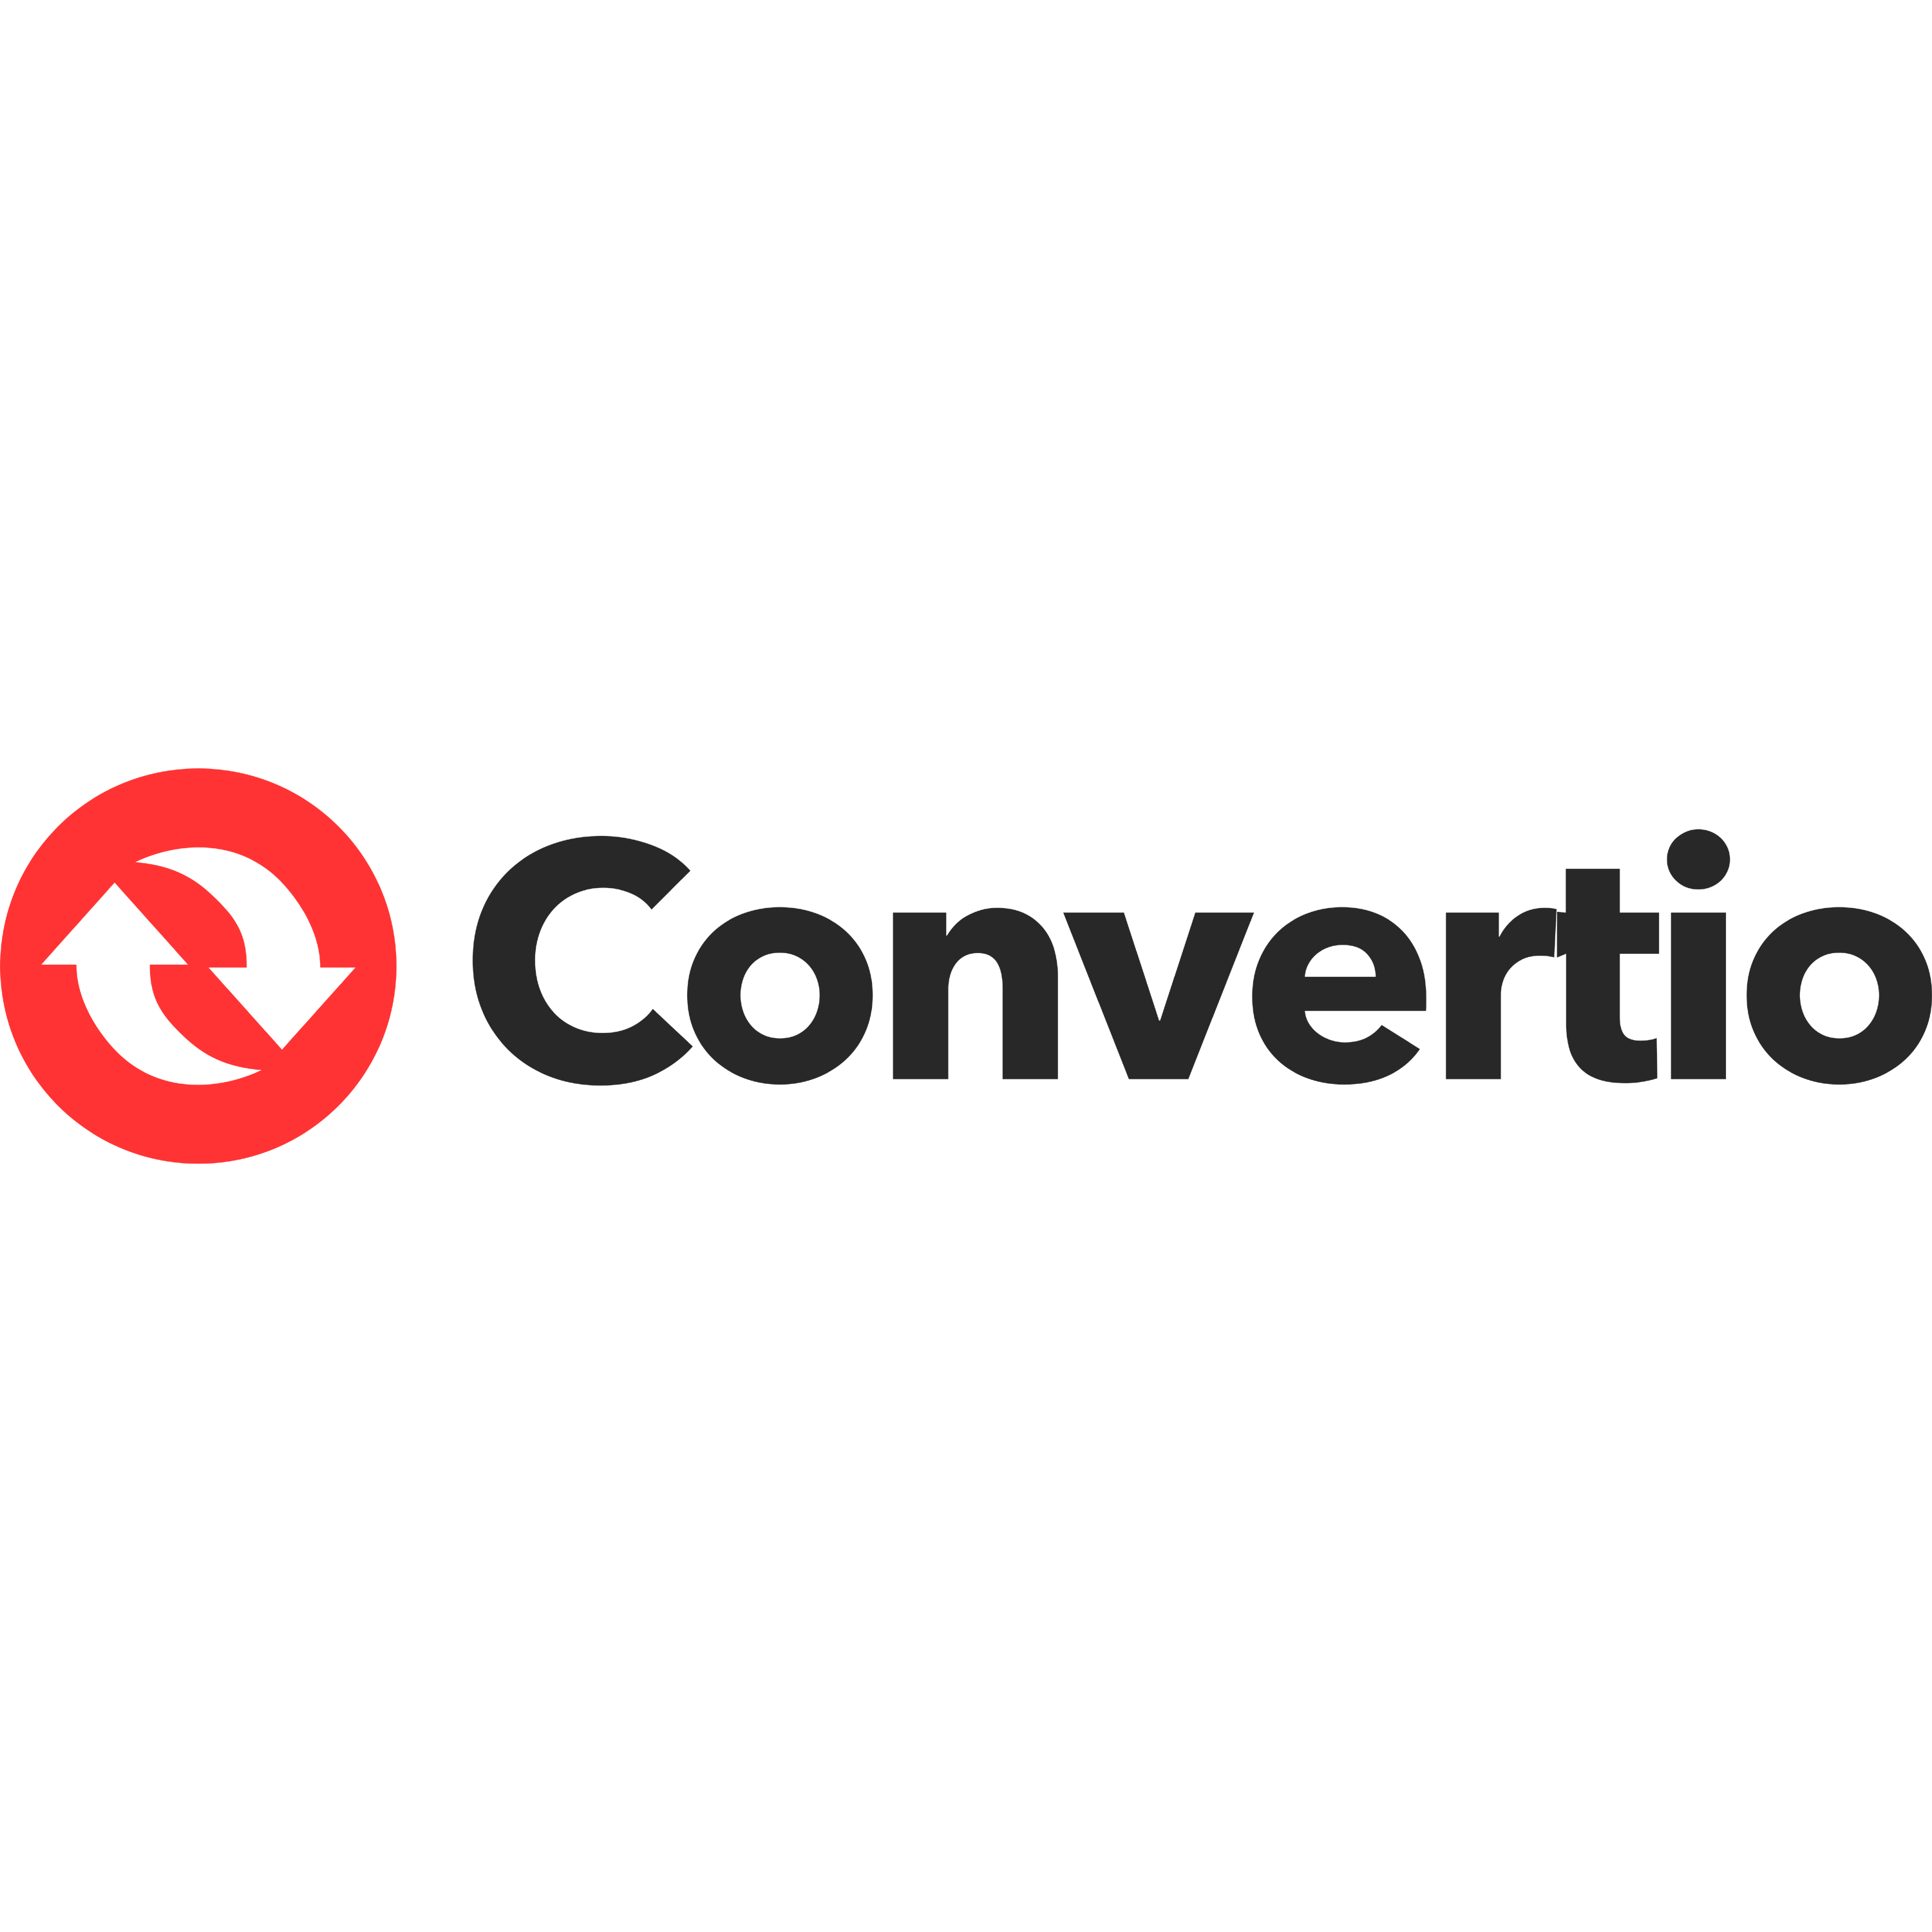 Convertio Logo Transparent Image